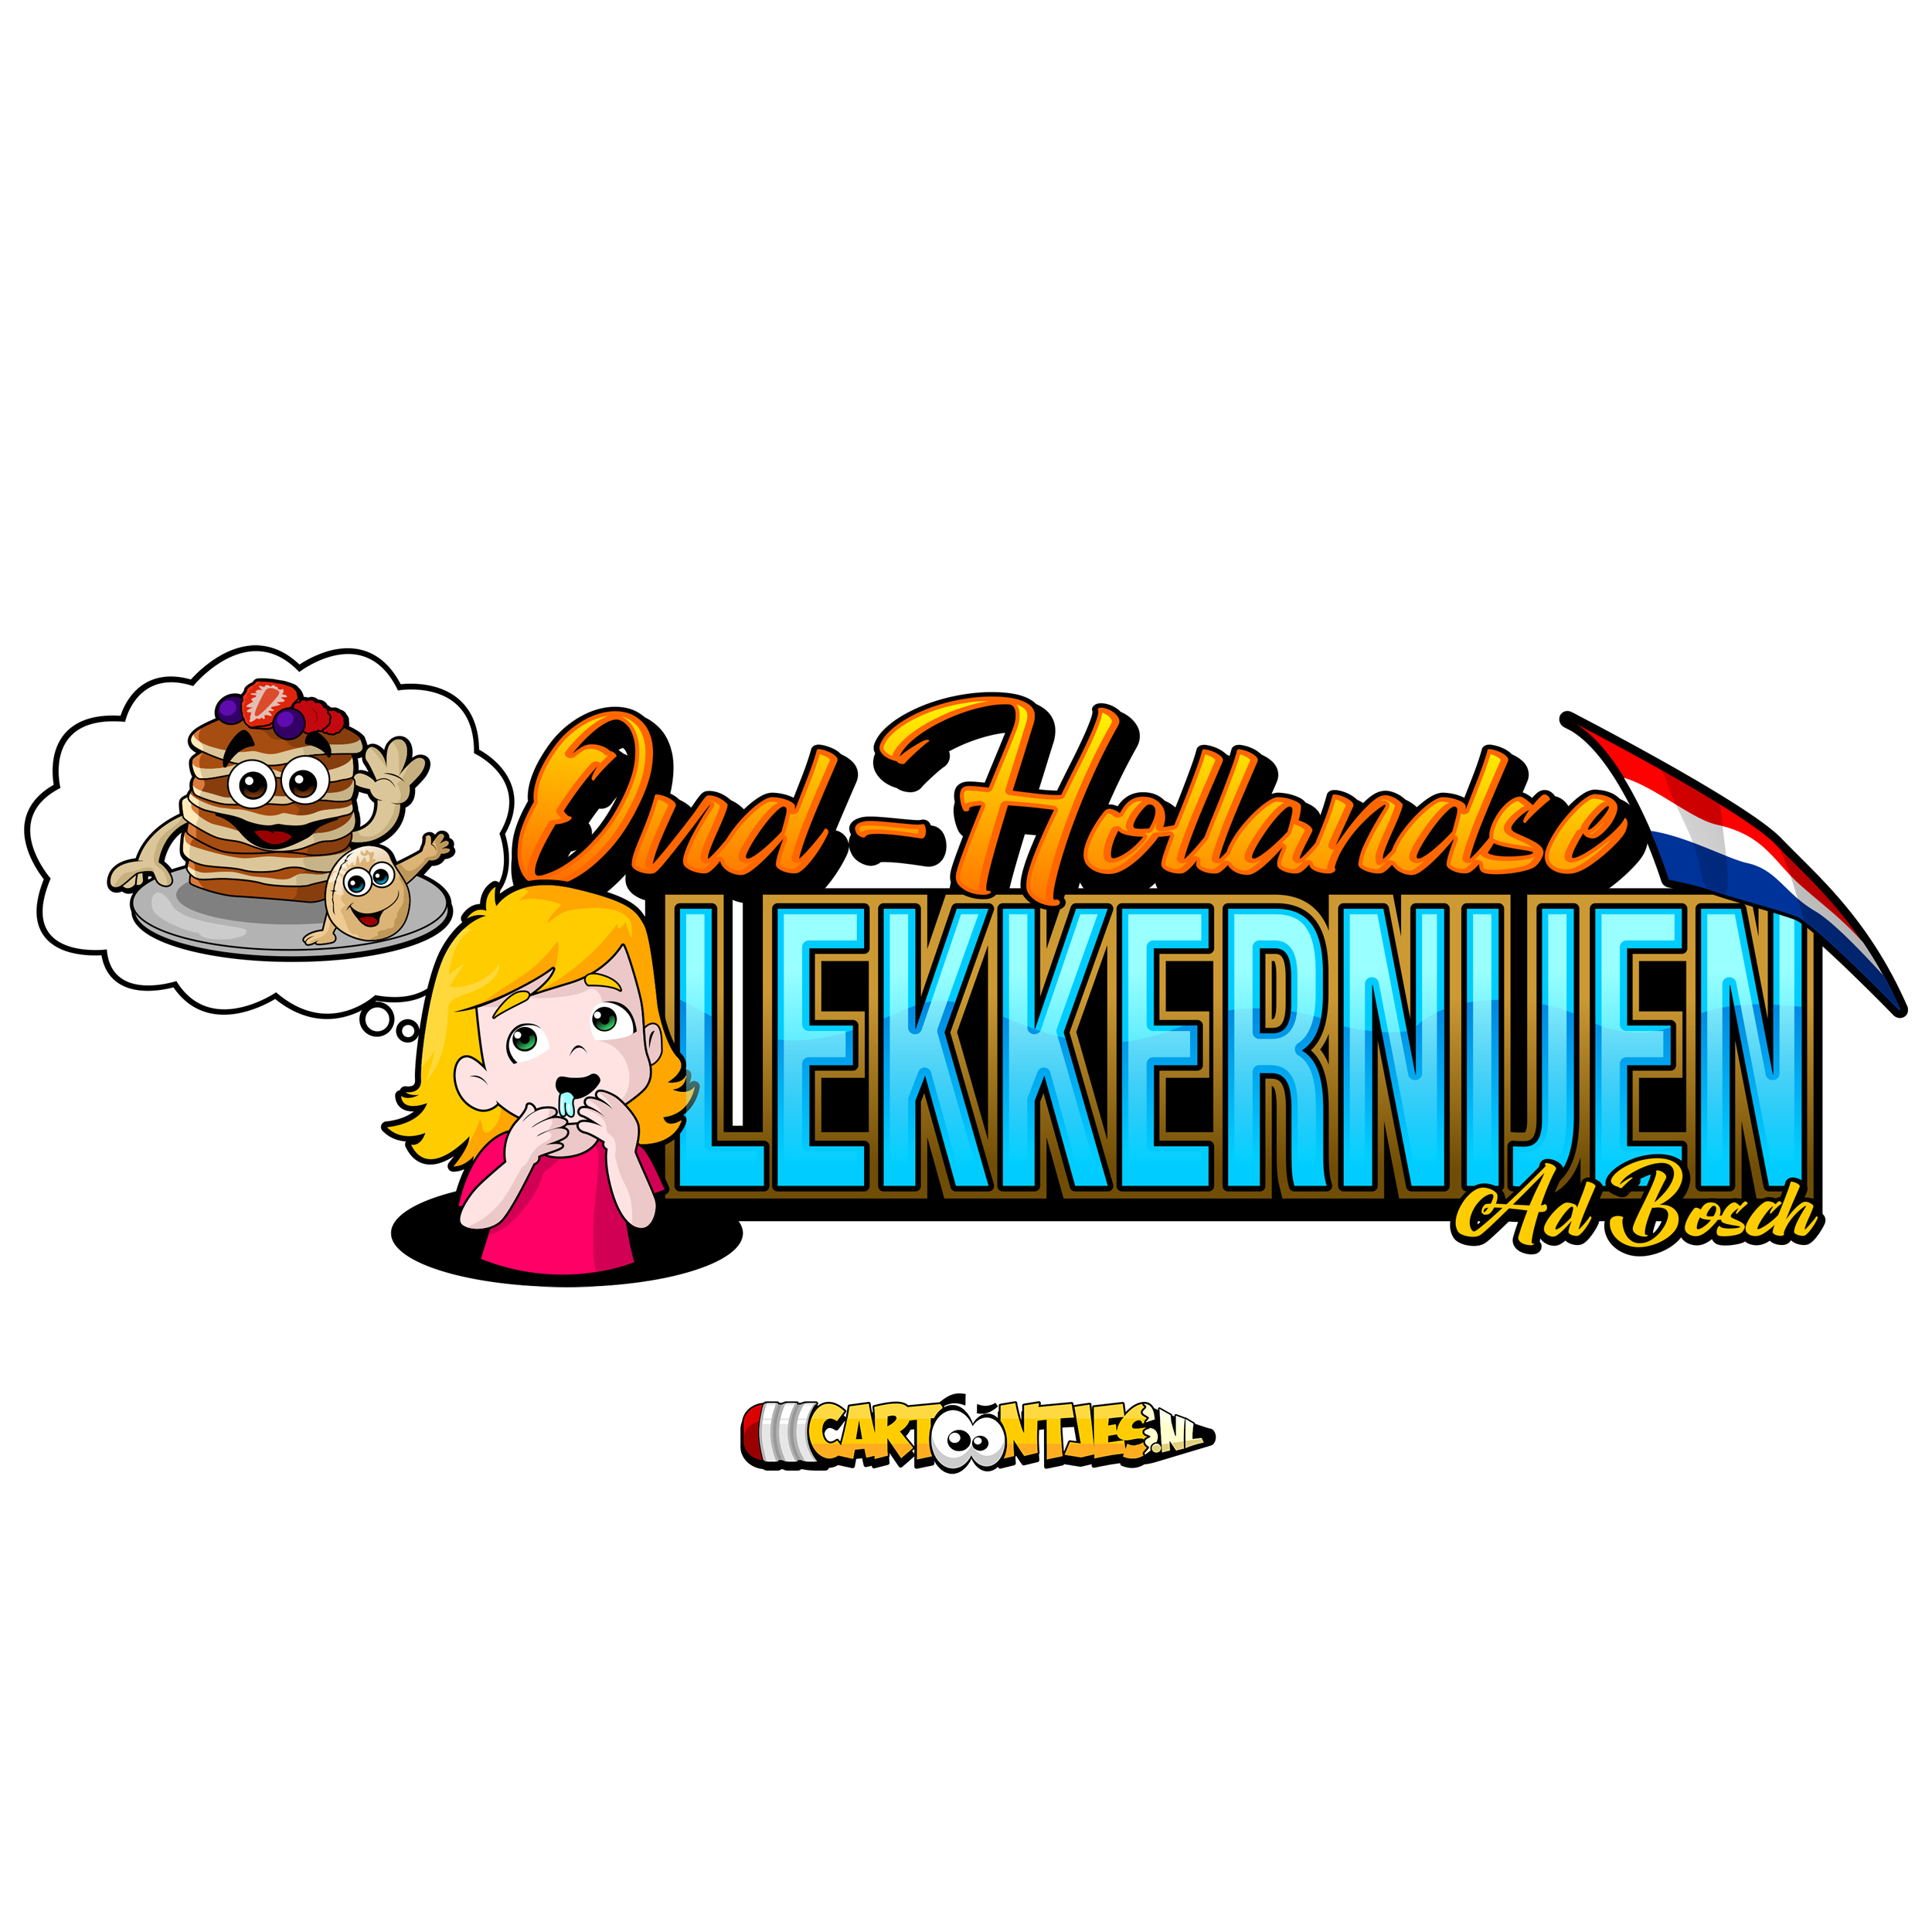 hollandse lekkernijen logo kermis gebak